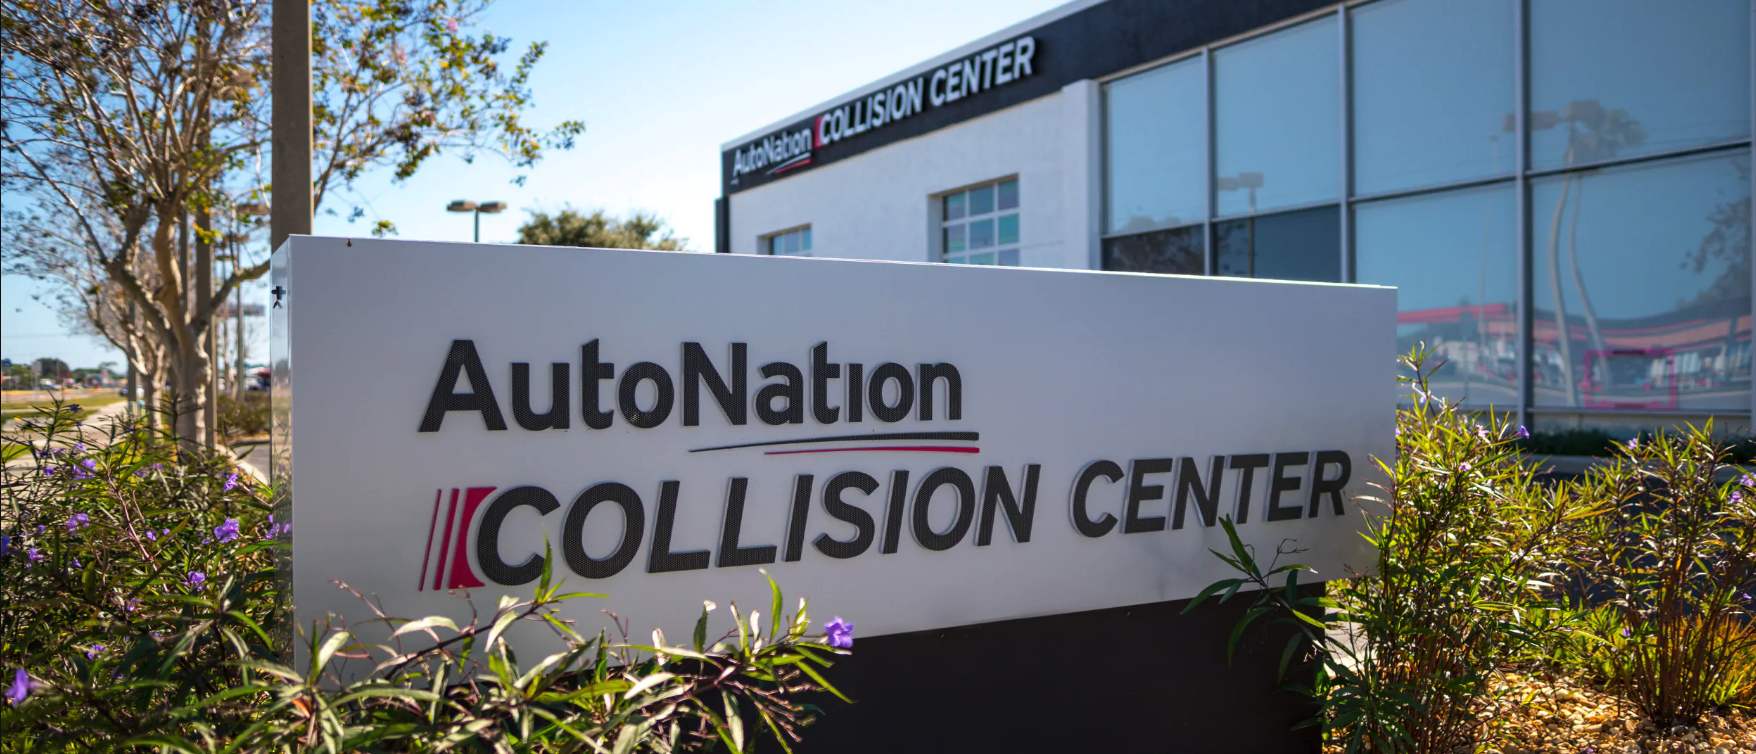 AutoNation Chevrolet North Richland Hills Collision Center